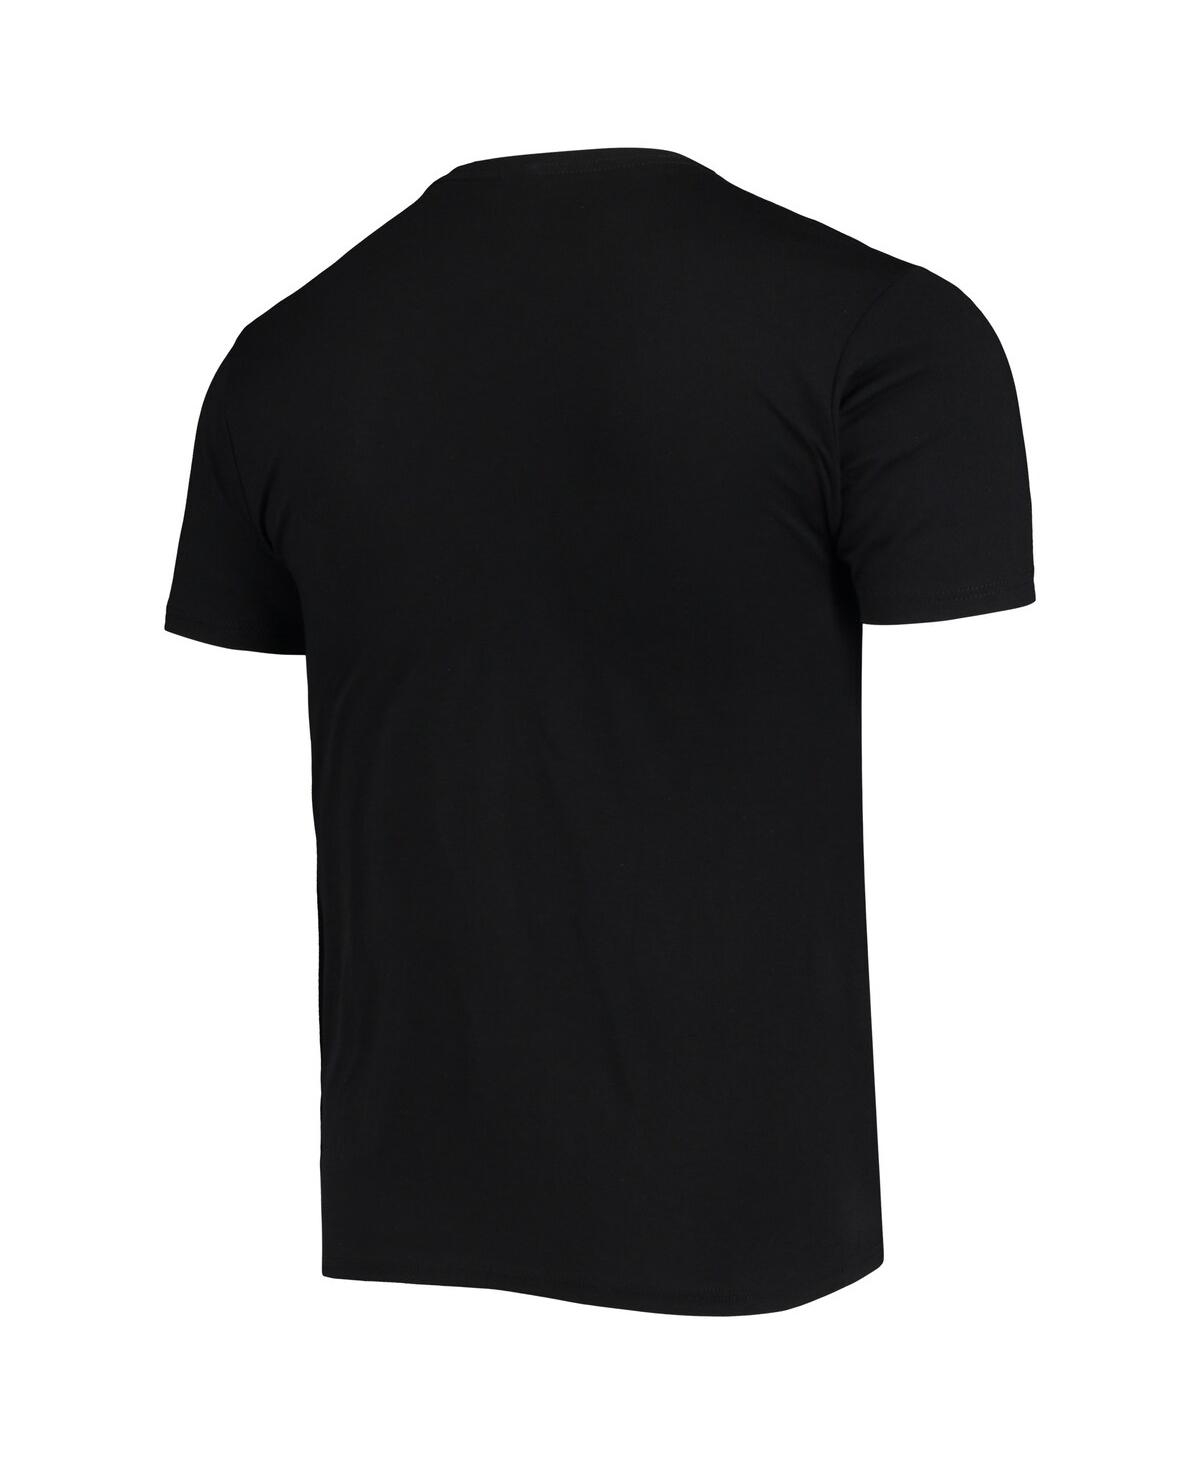 Shop Sportiqe Unisex  Black Phoenix Suns Rally The Valley Tri-blend Comfy T-shirt